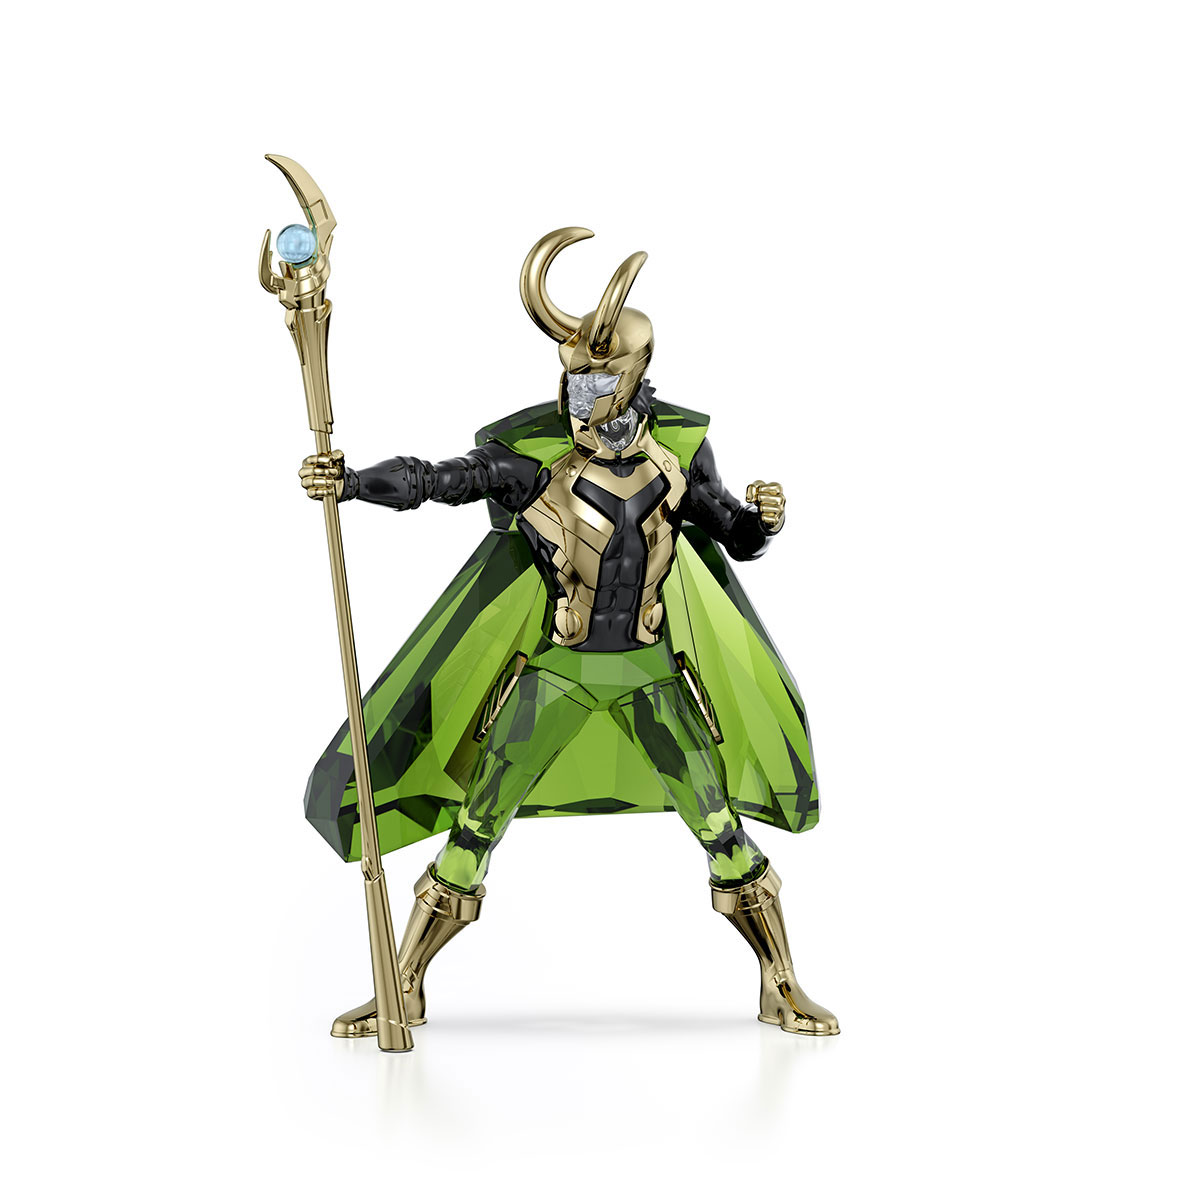 Swarovski Marvel Loki Figure